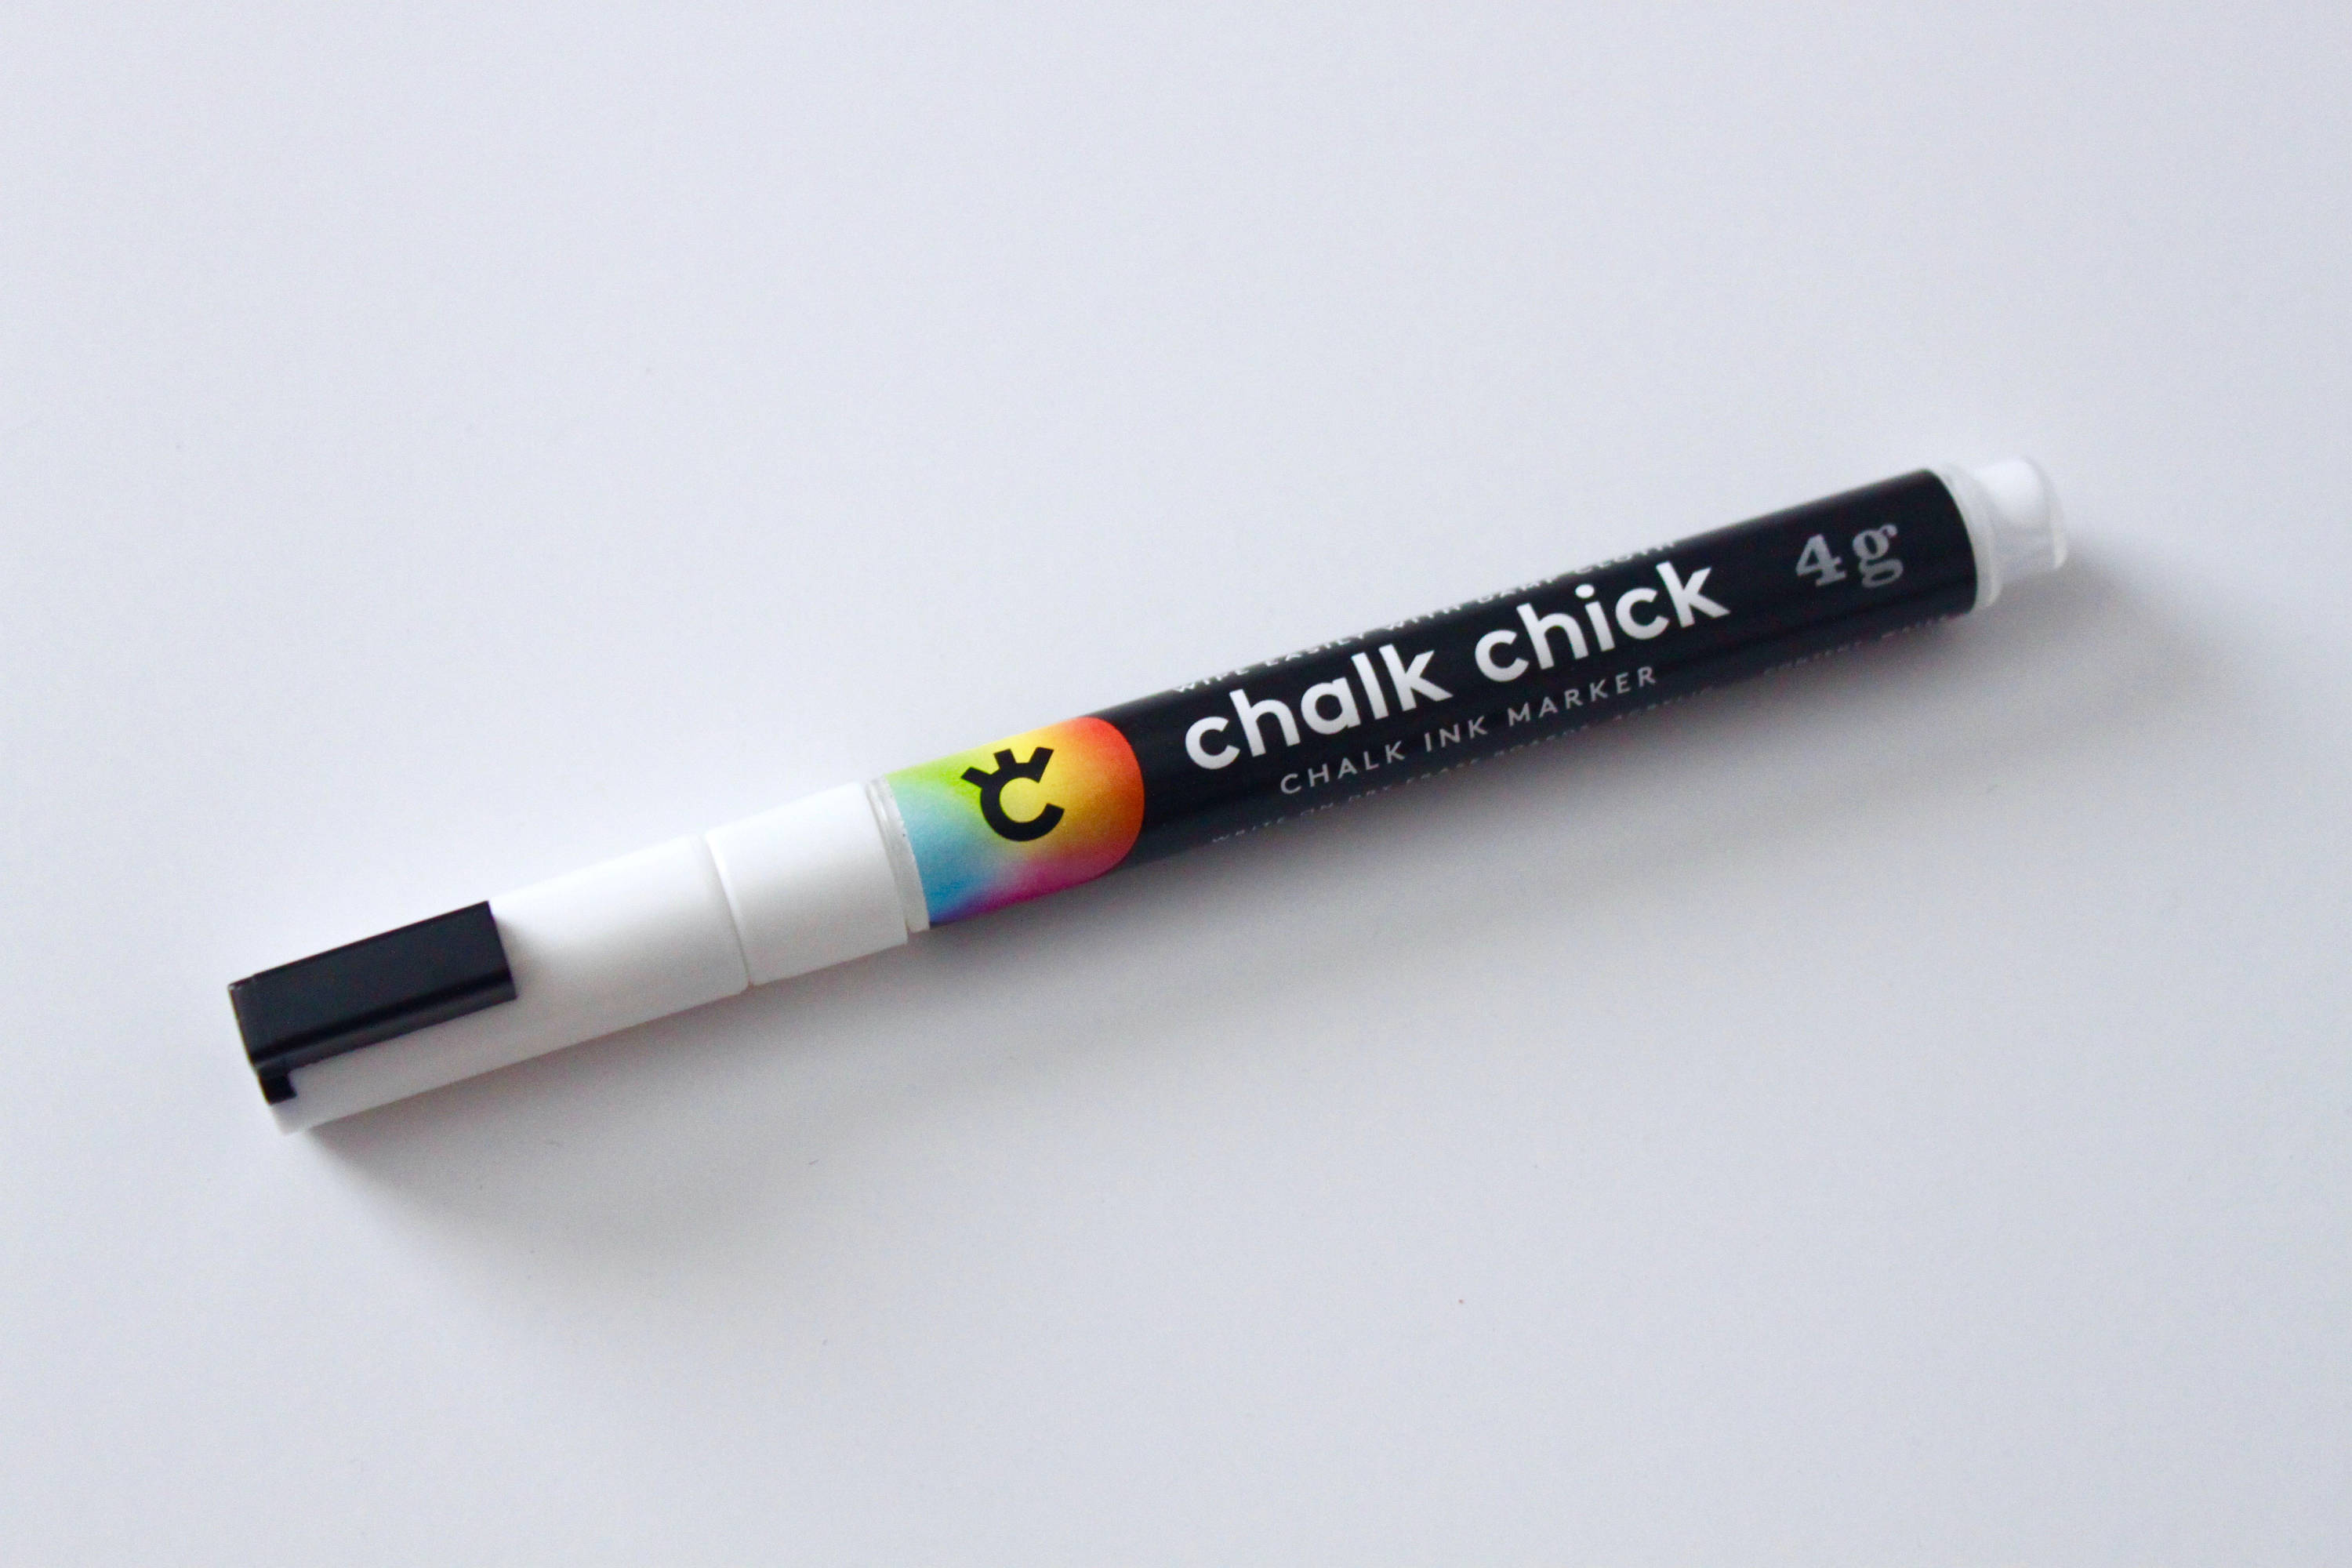 Kassa Liquid Chalk Markers for Blackboards Neon & Pastel Colors Erasable  Pens on Chalkboard Glass, Window , Mirror Reversible Dual Tip 